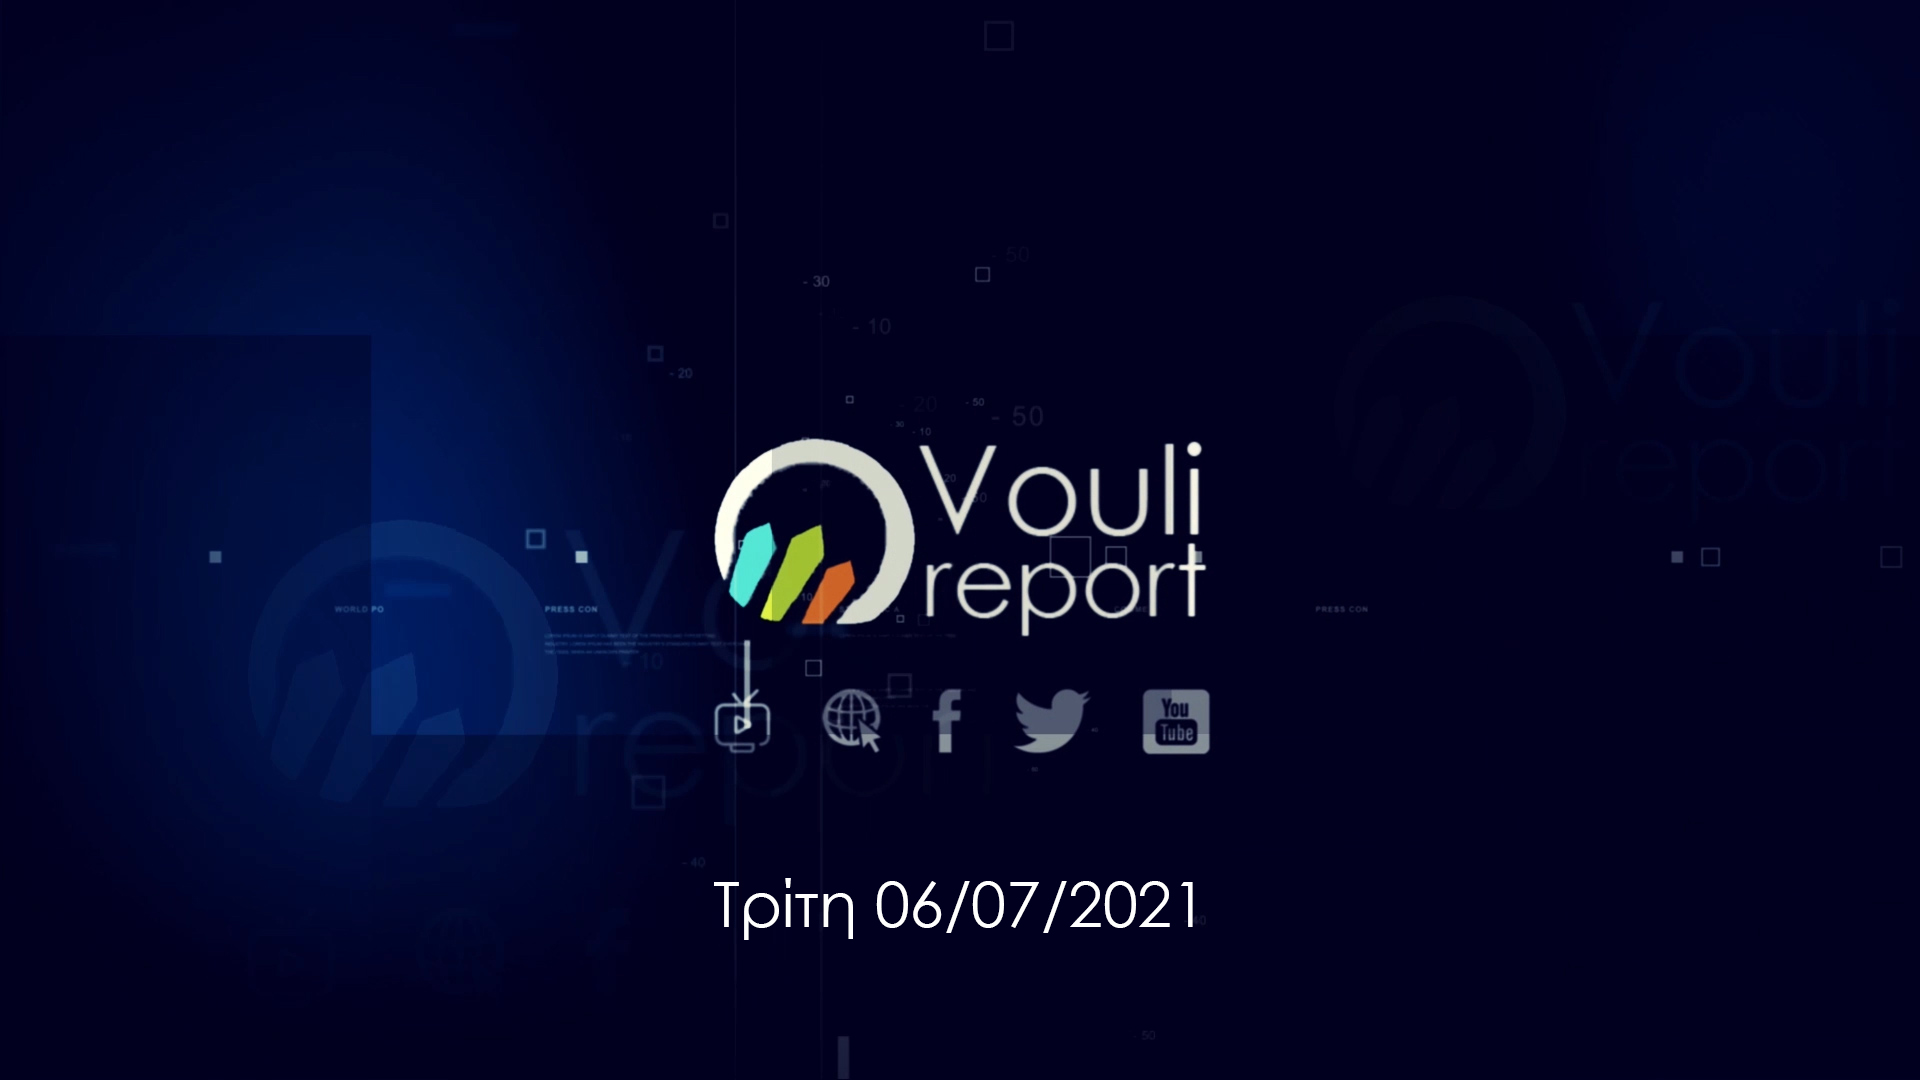 Vouli report | 06/07/2021, 6μμ